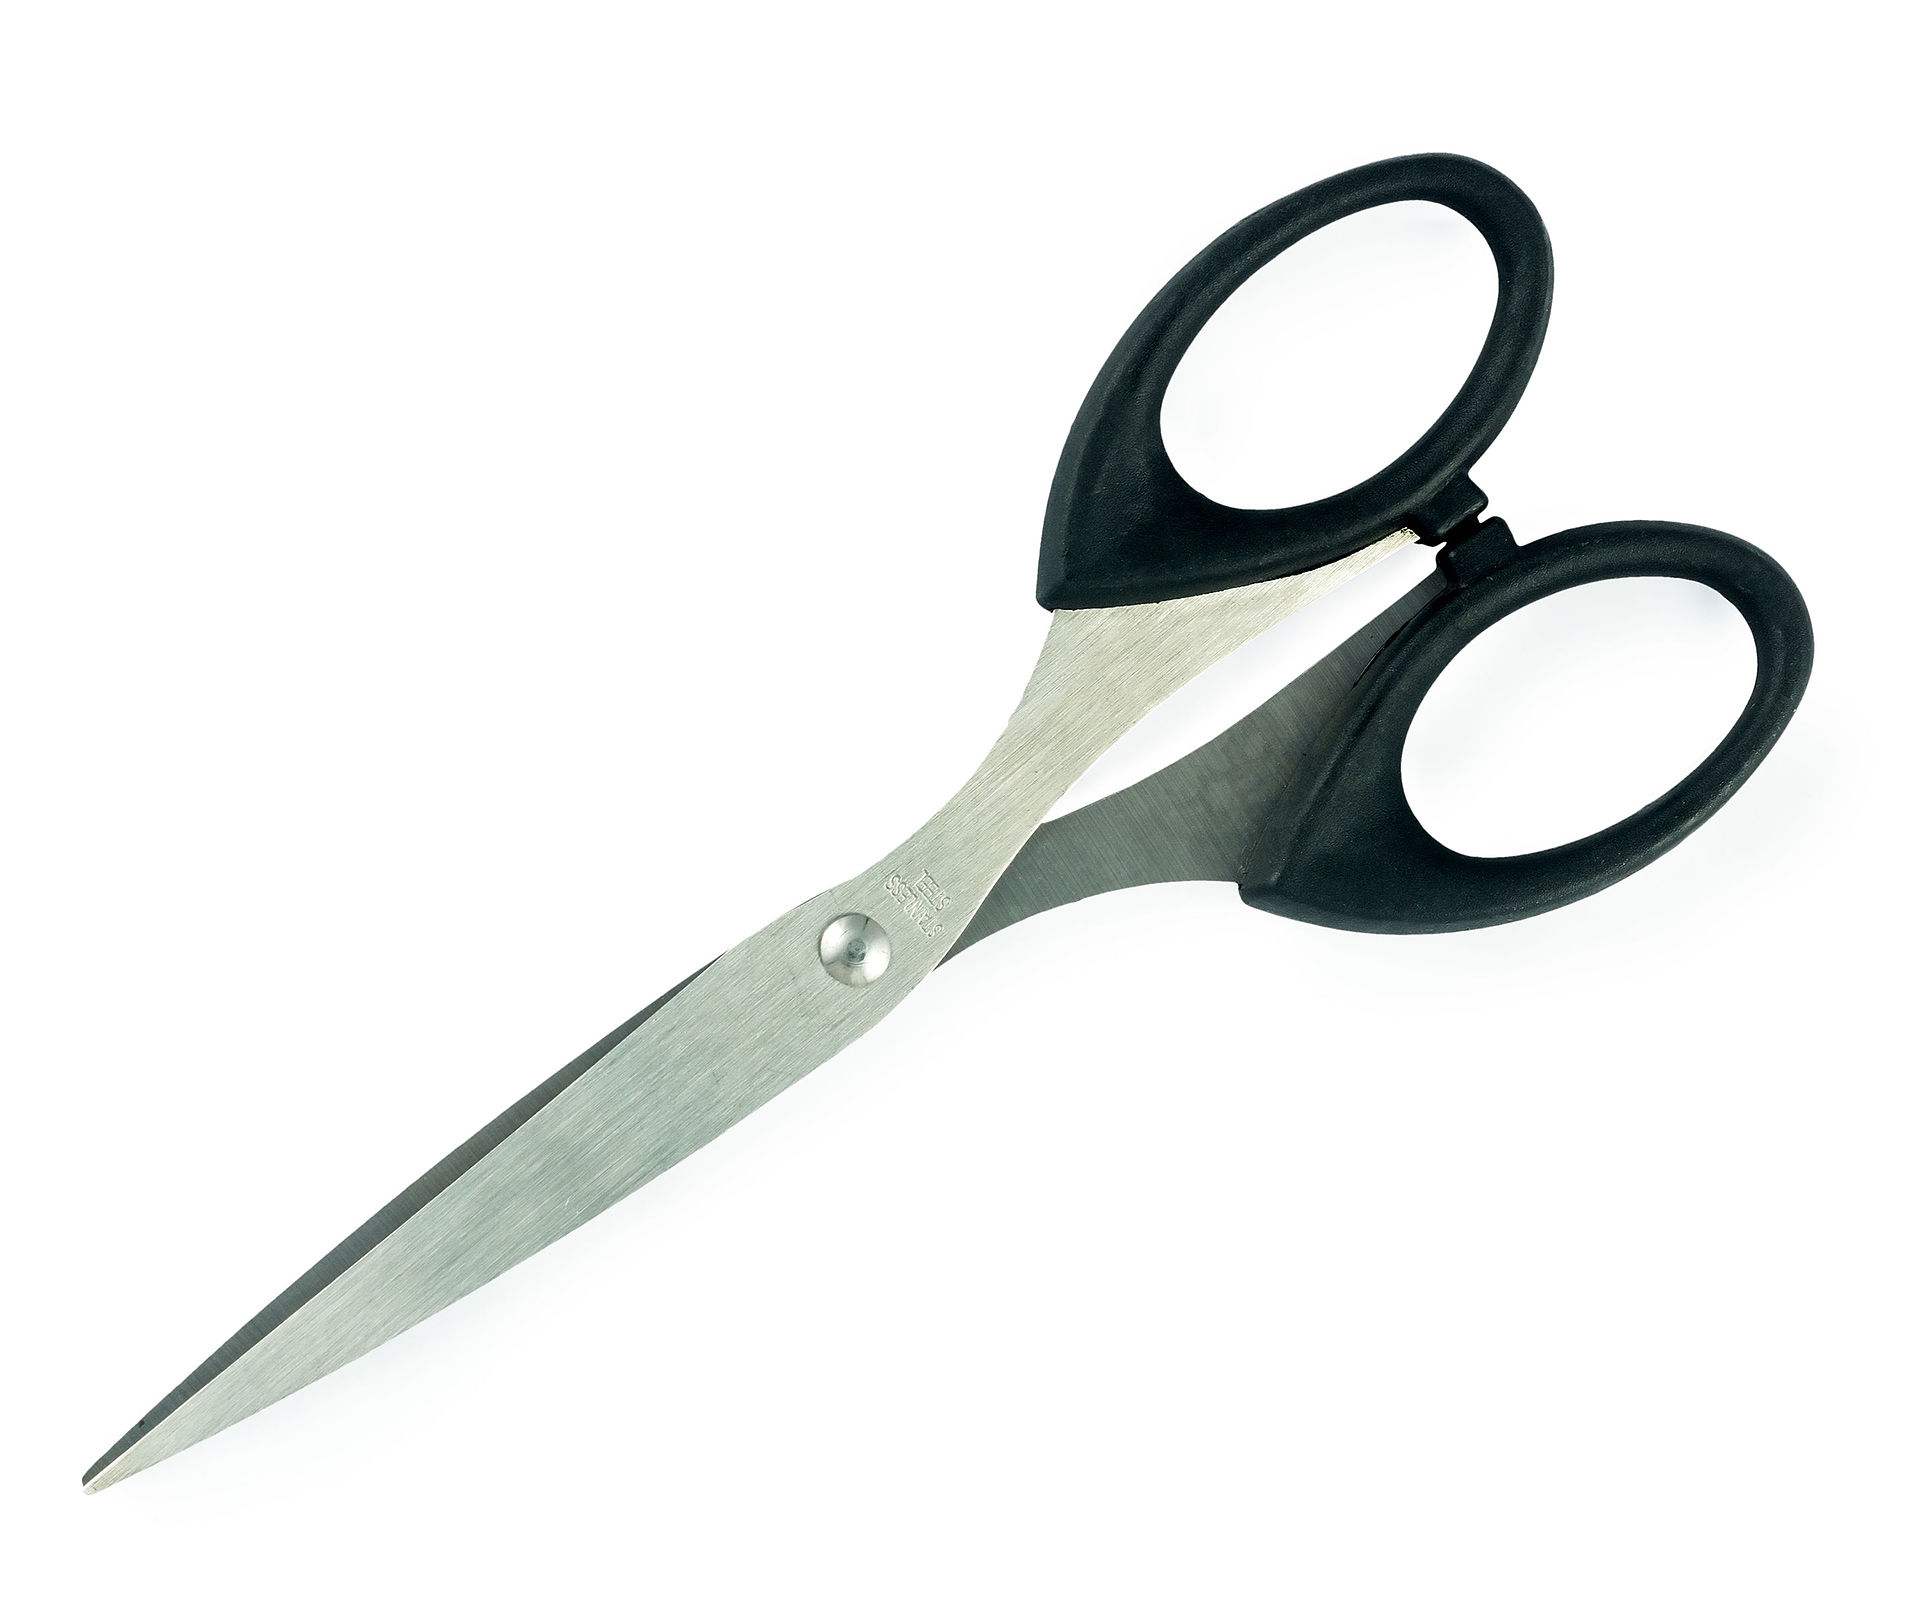 Item-ciseaux Pair of scissors with black handle 2015-06-07.jpg